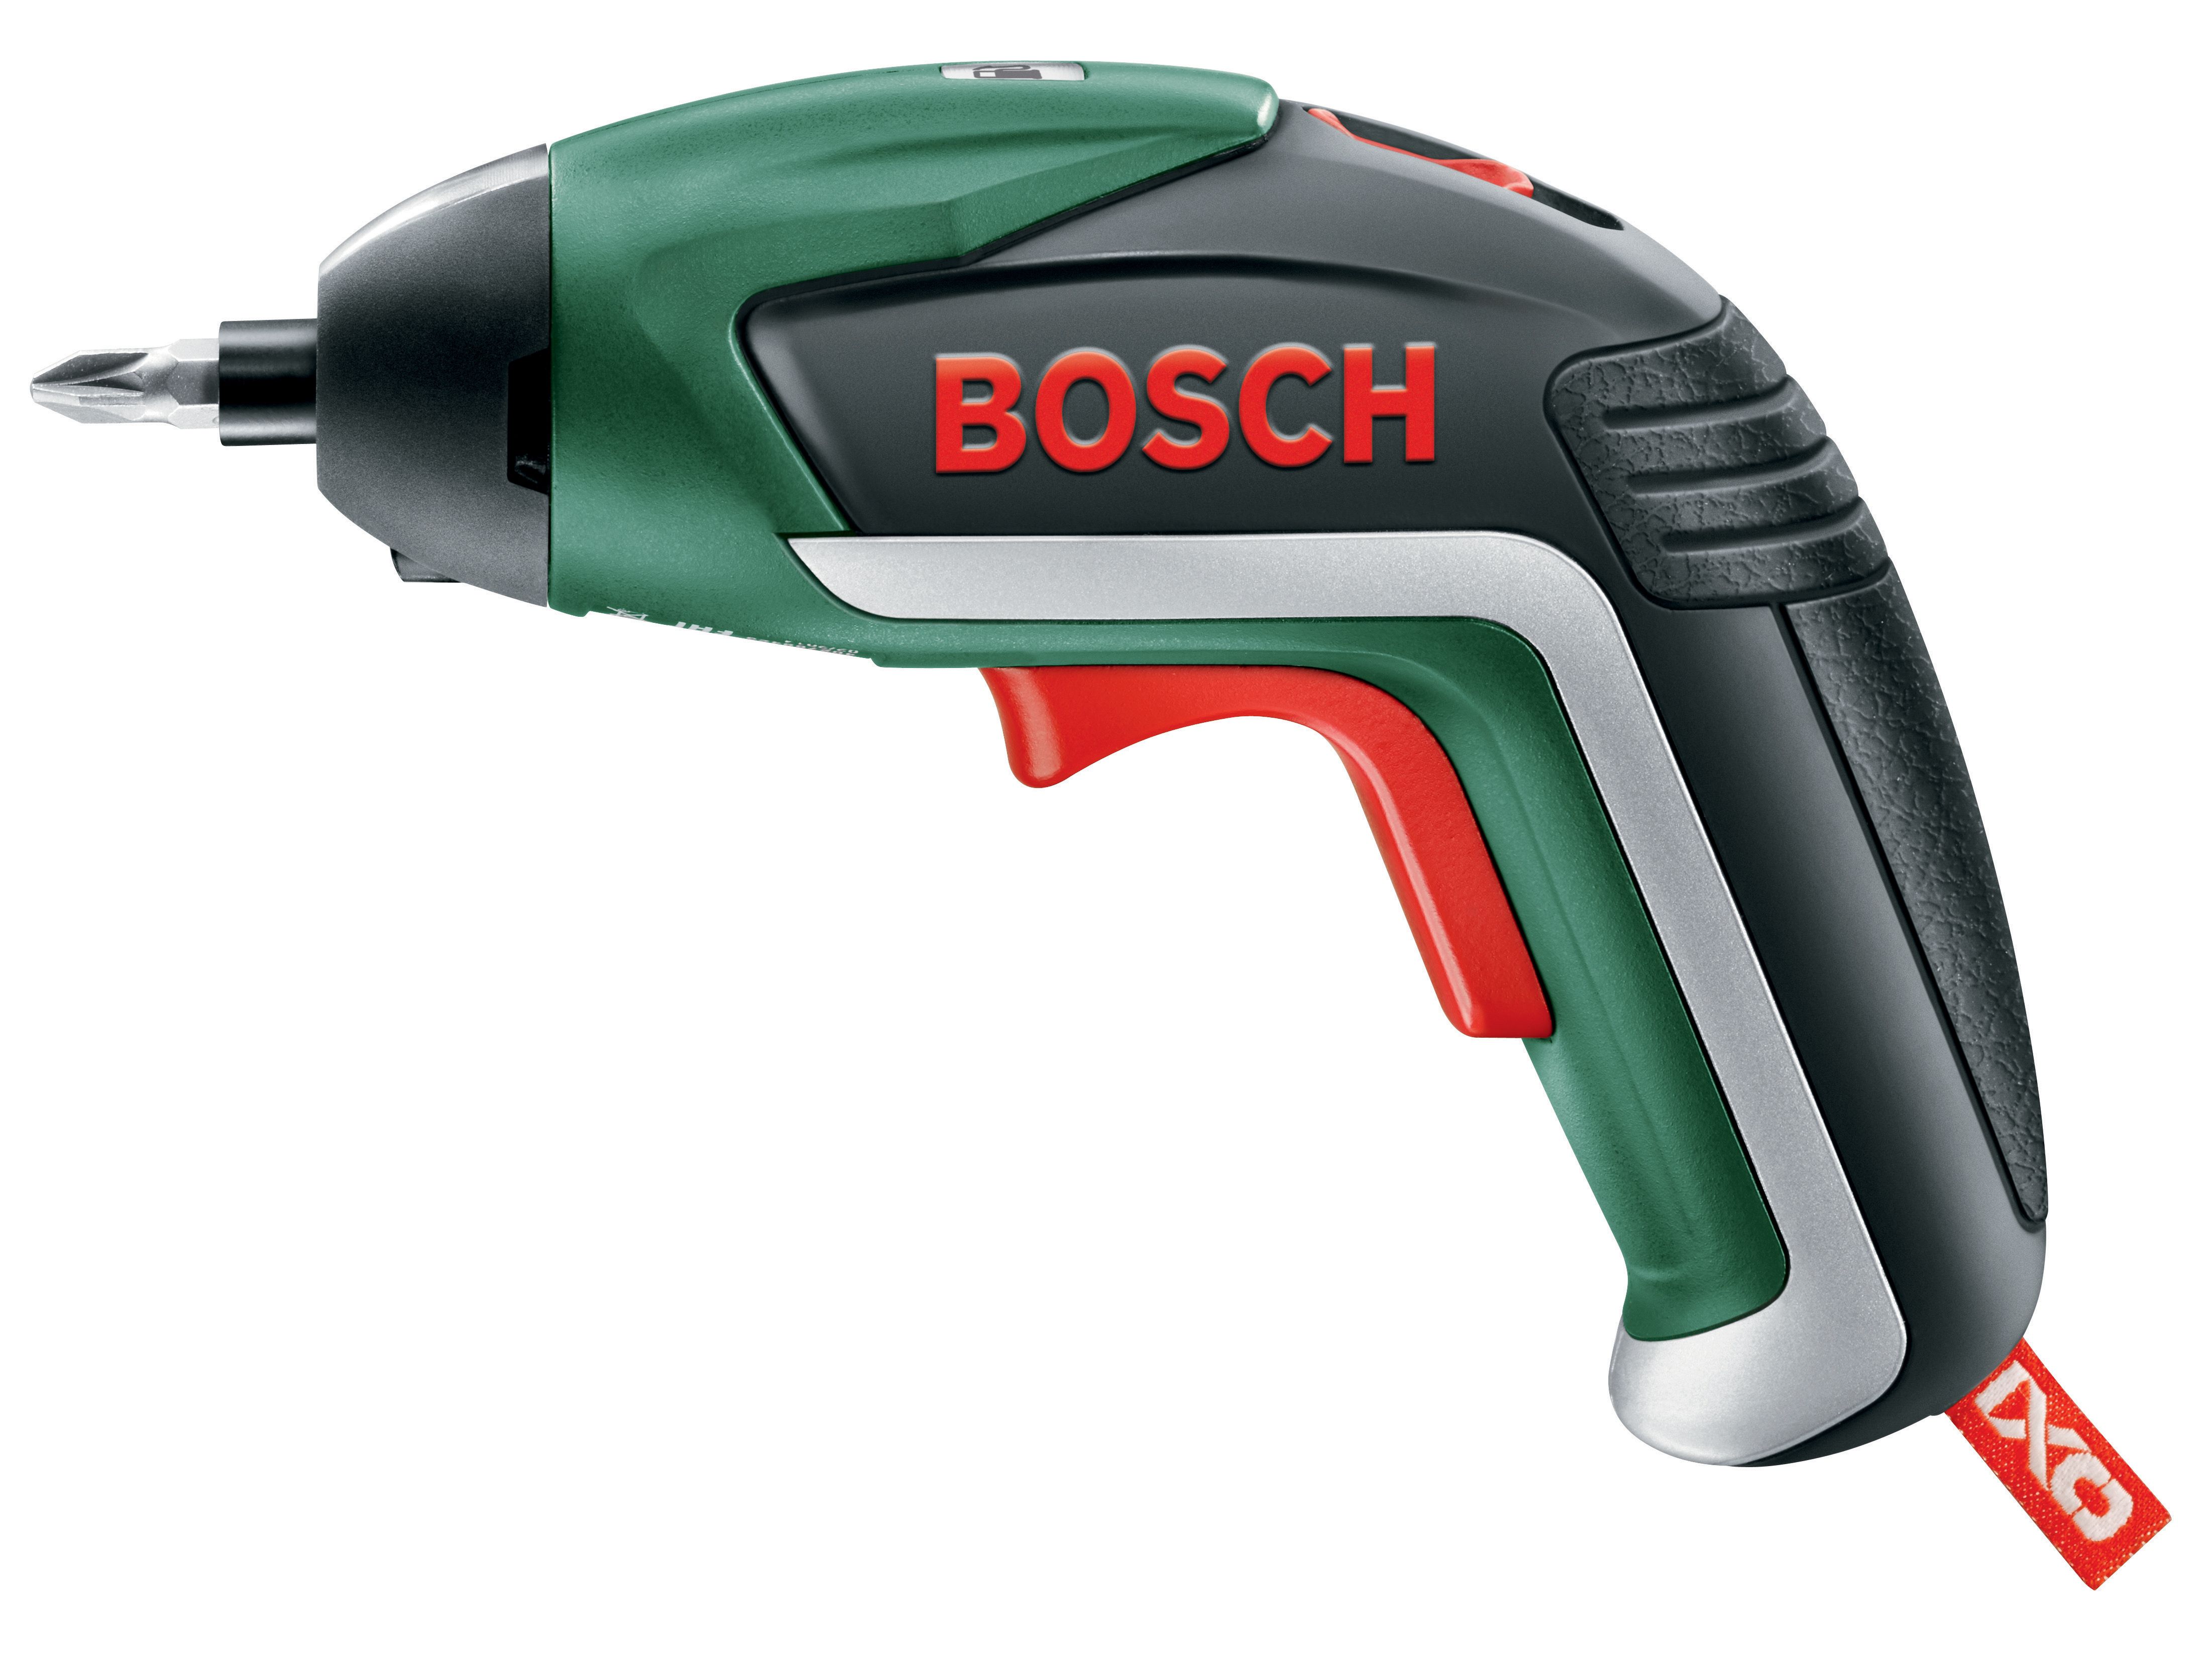 Bosch IXO 3.6V 1.5Ah Li-ion Cordless Screwdriver